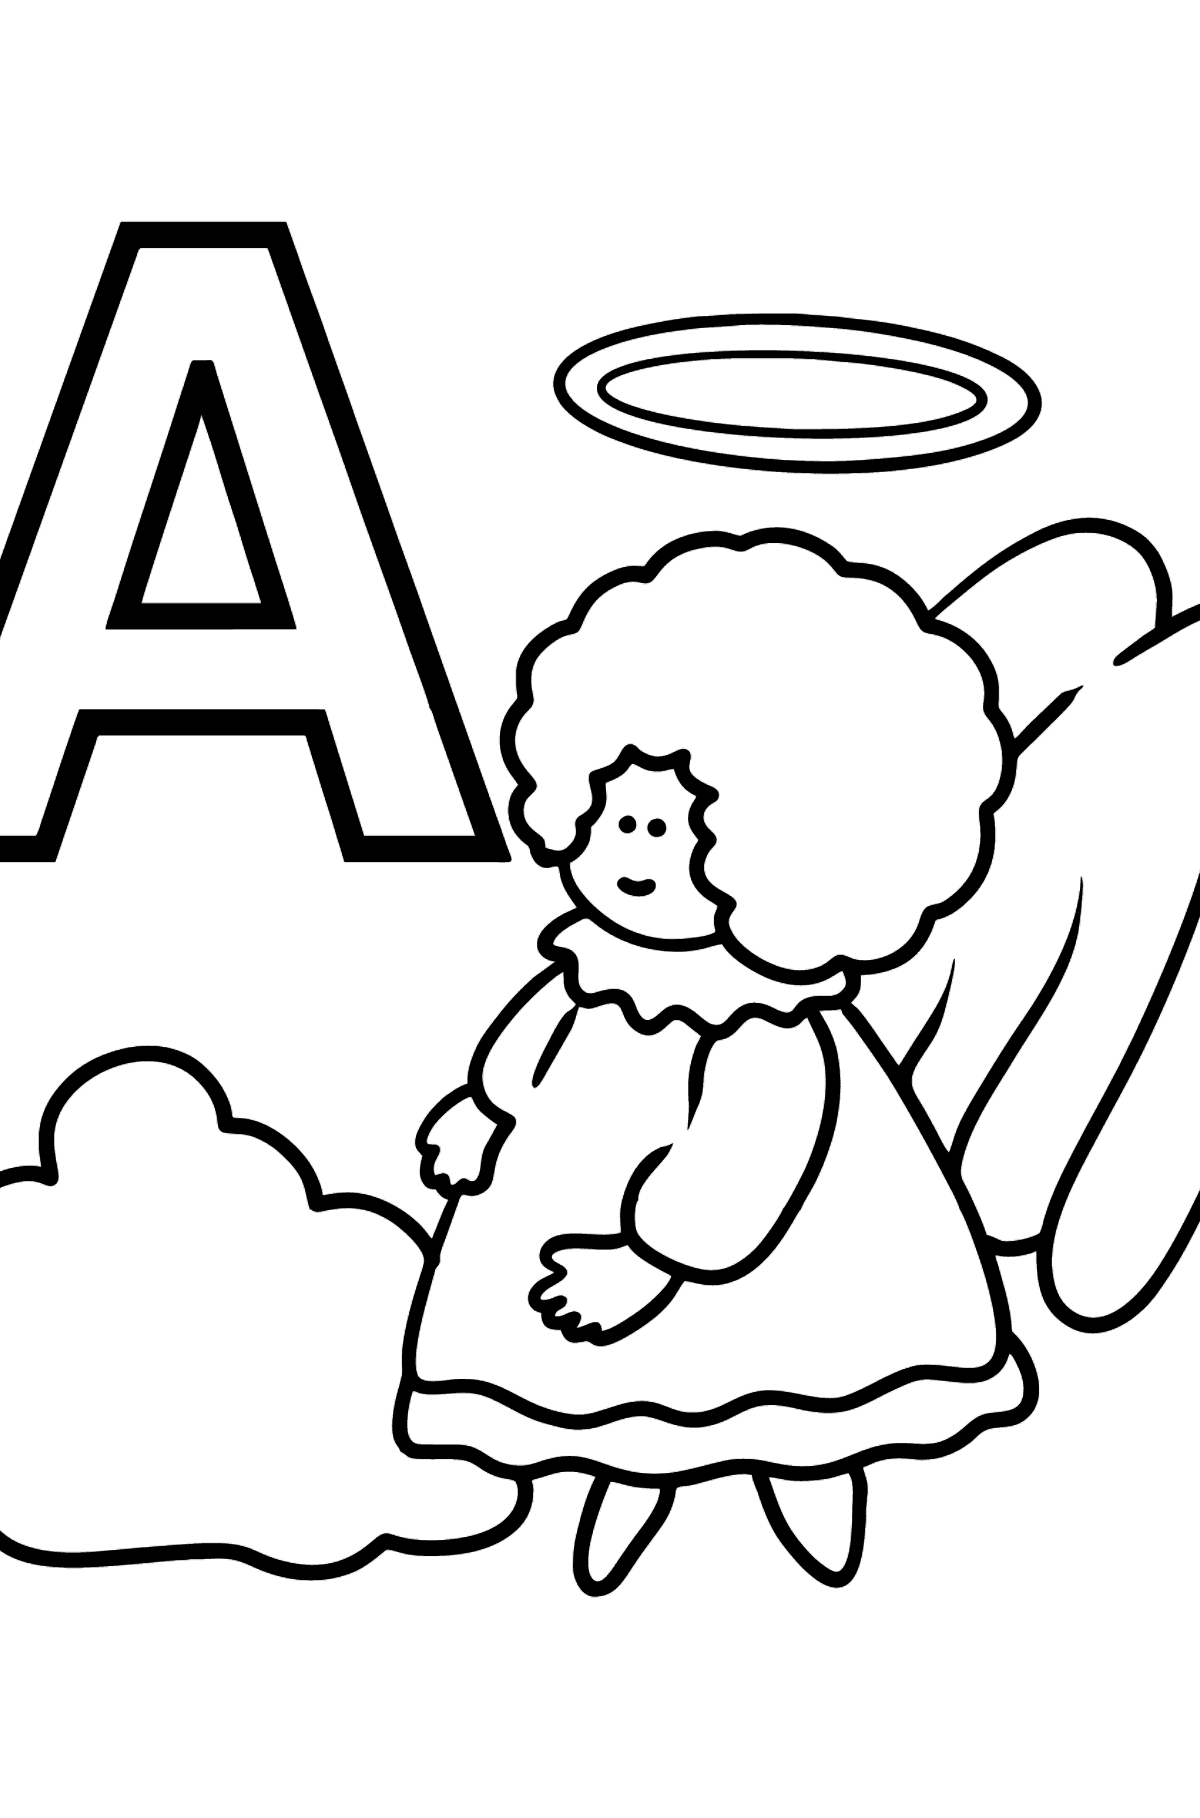 Раскраска Буква A испанского алфавита - ÁNGEL - Картинки для Детей